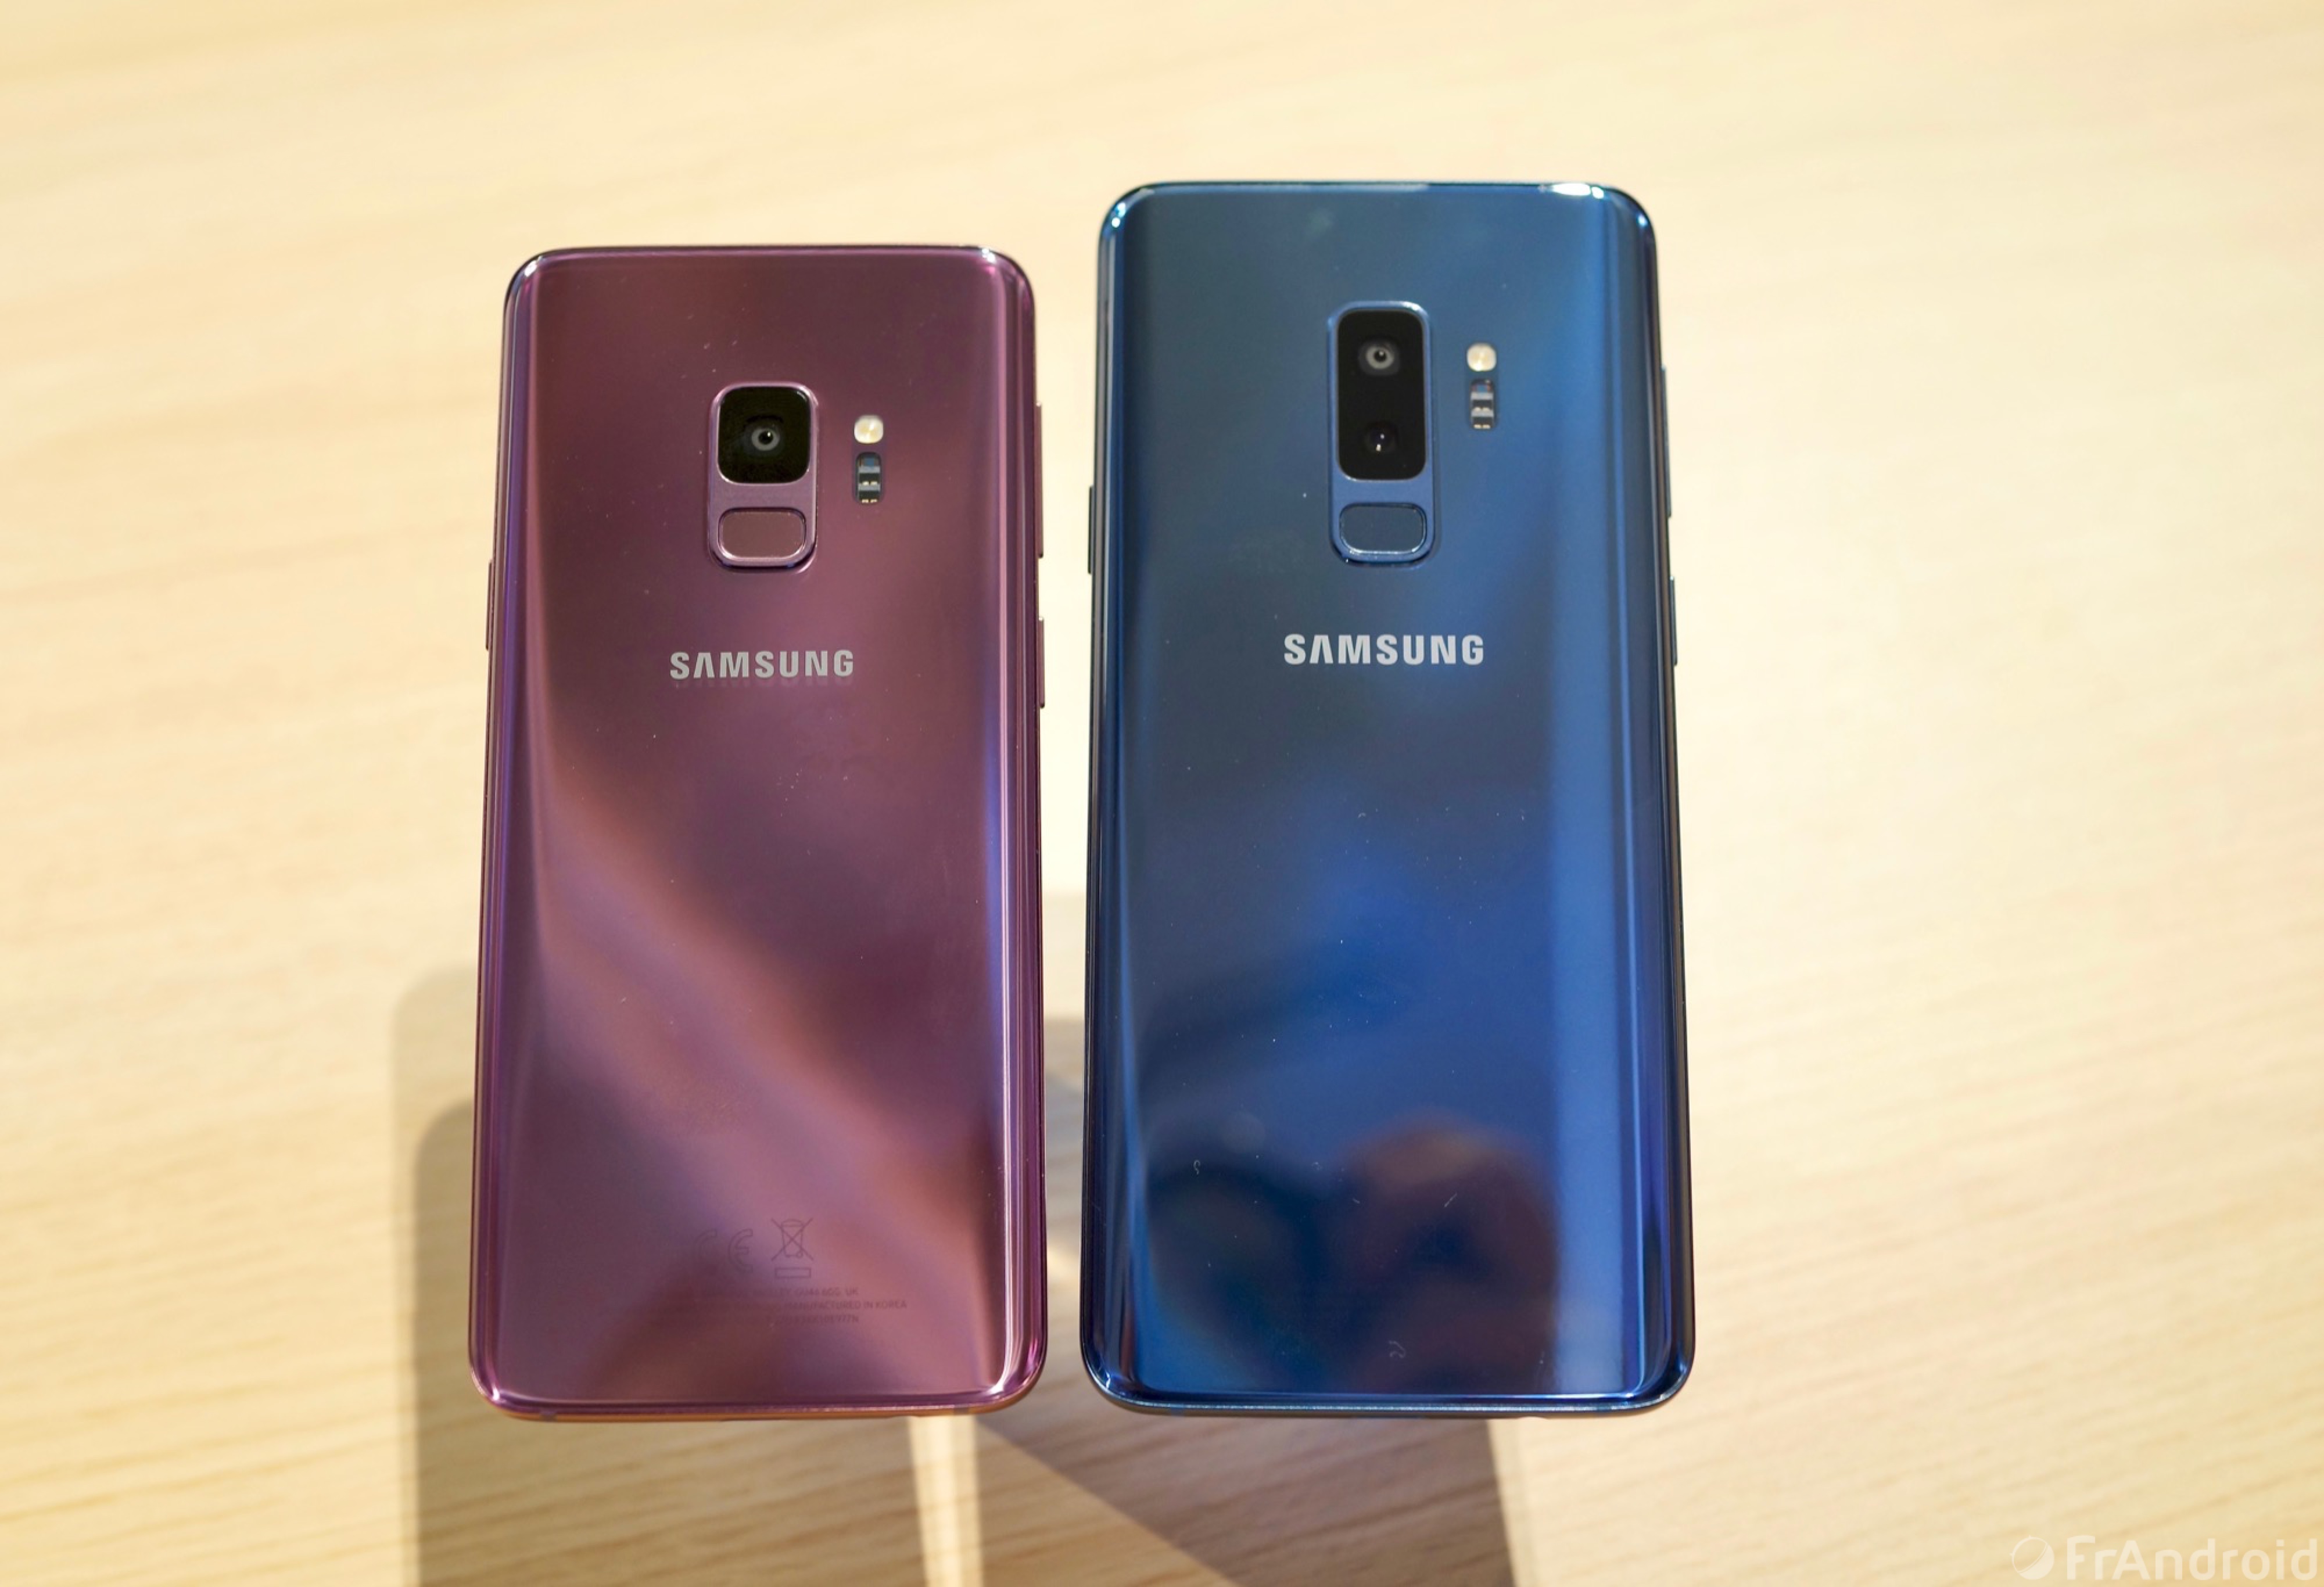 Prise en main du Samsung Galaxy S9 et du Galaxy S9 